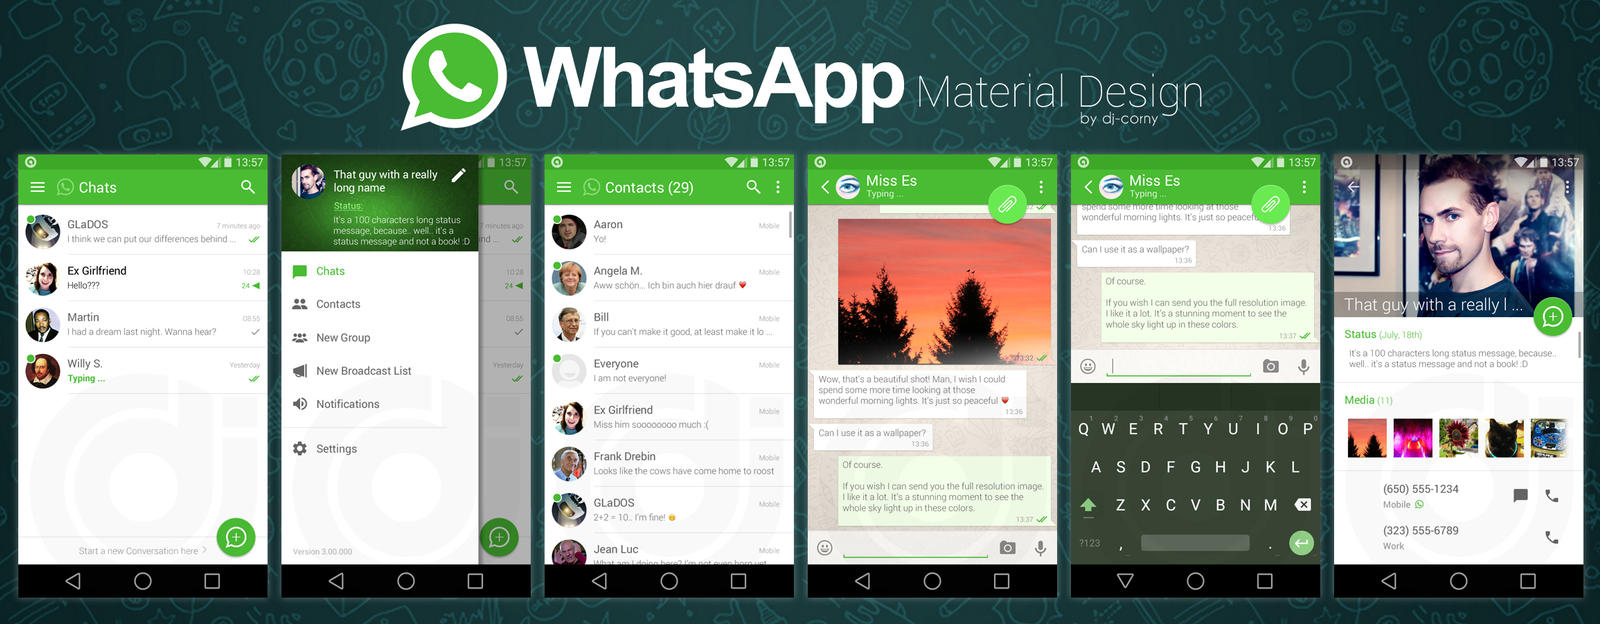  WhatsApp  Material UI  by dj corny on DeviantArt